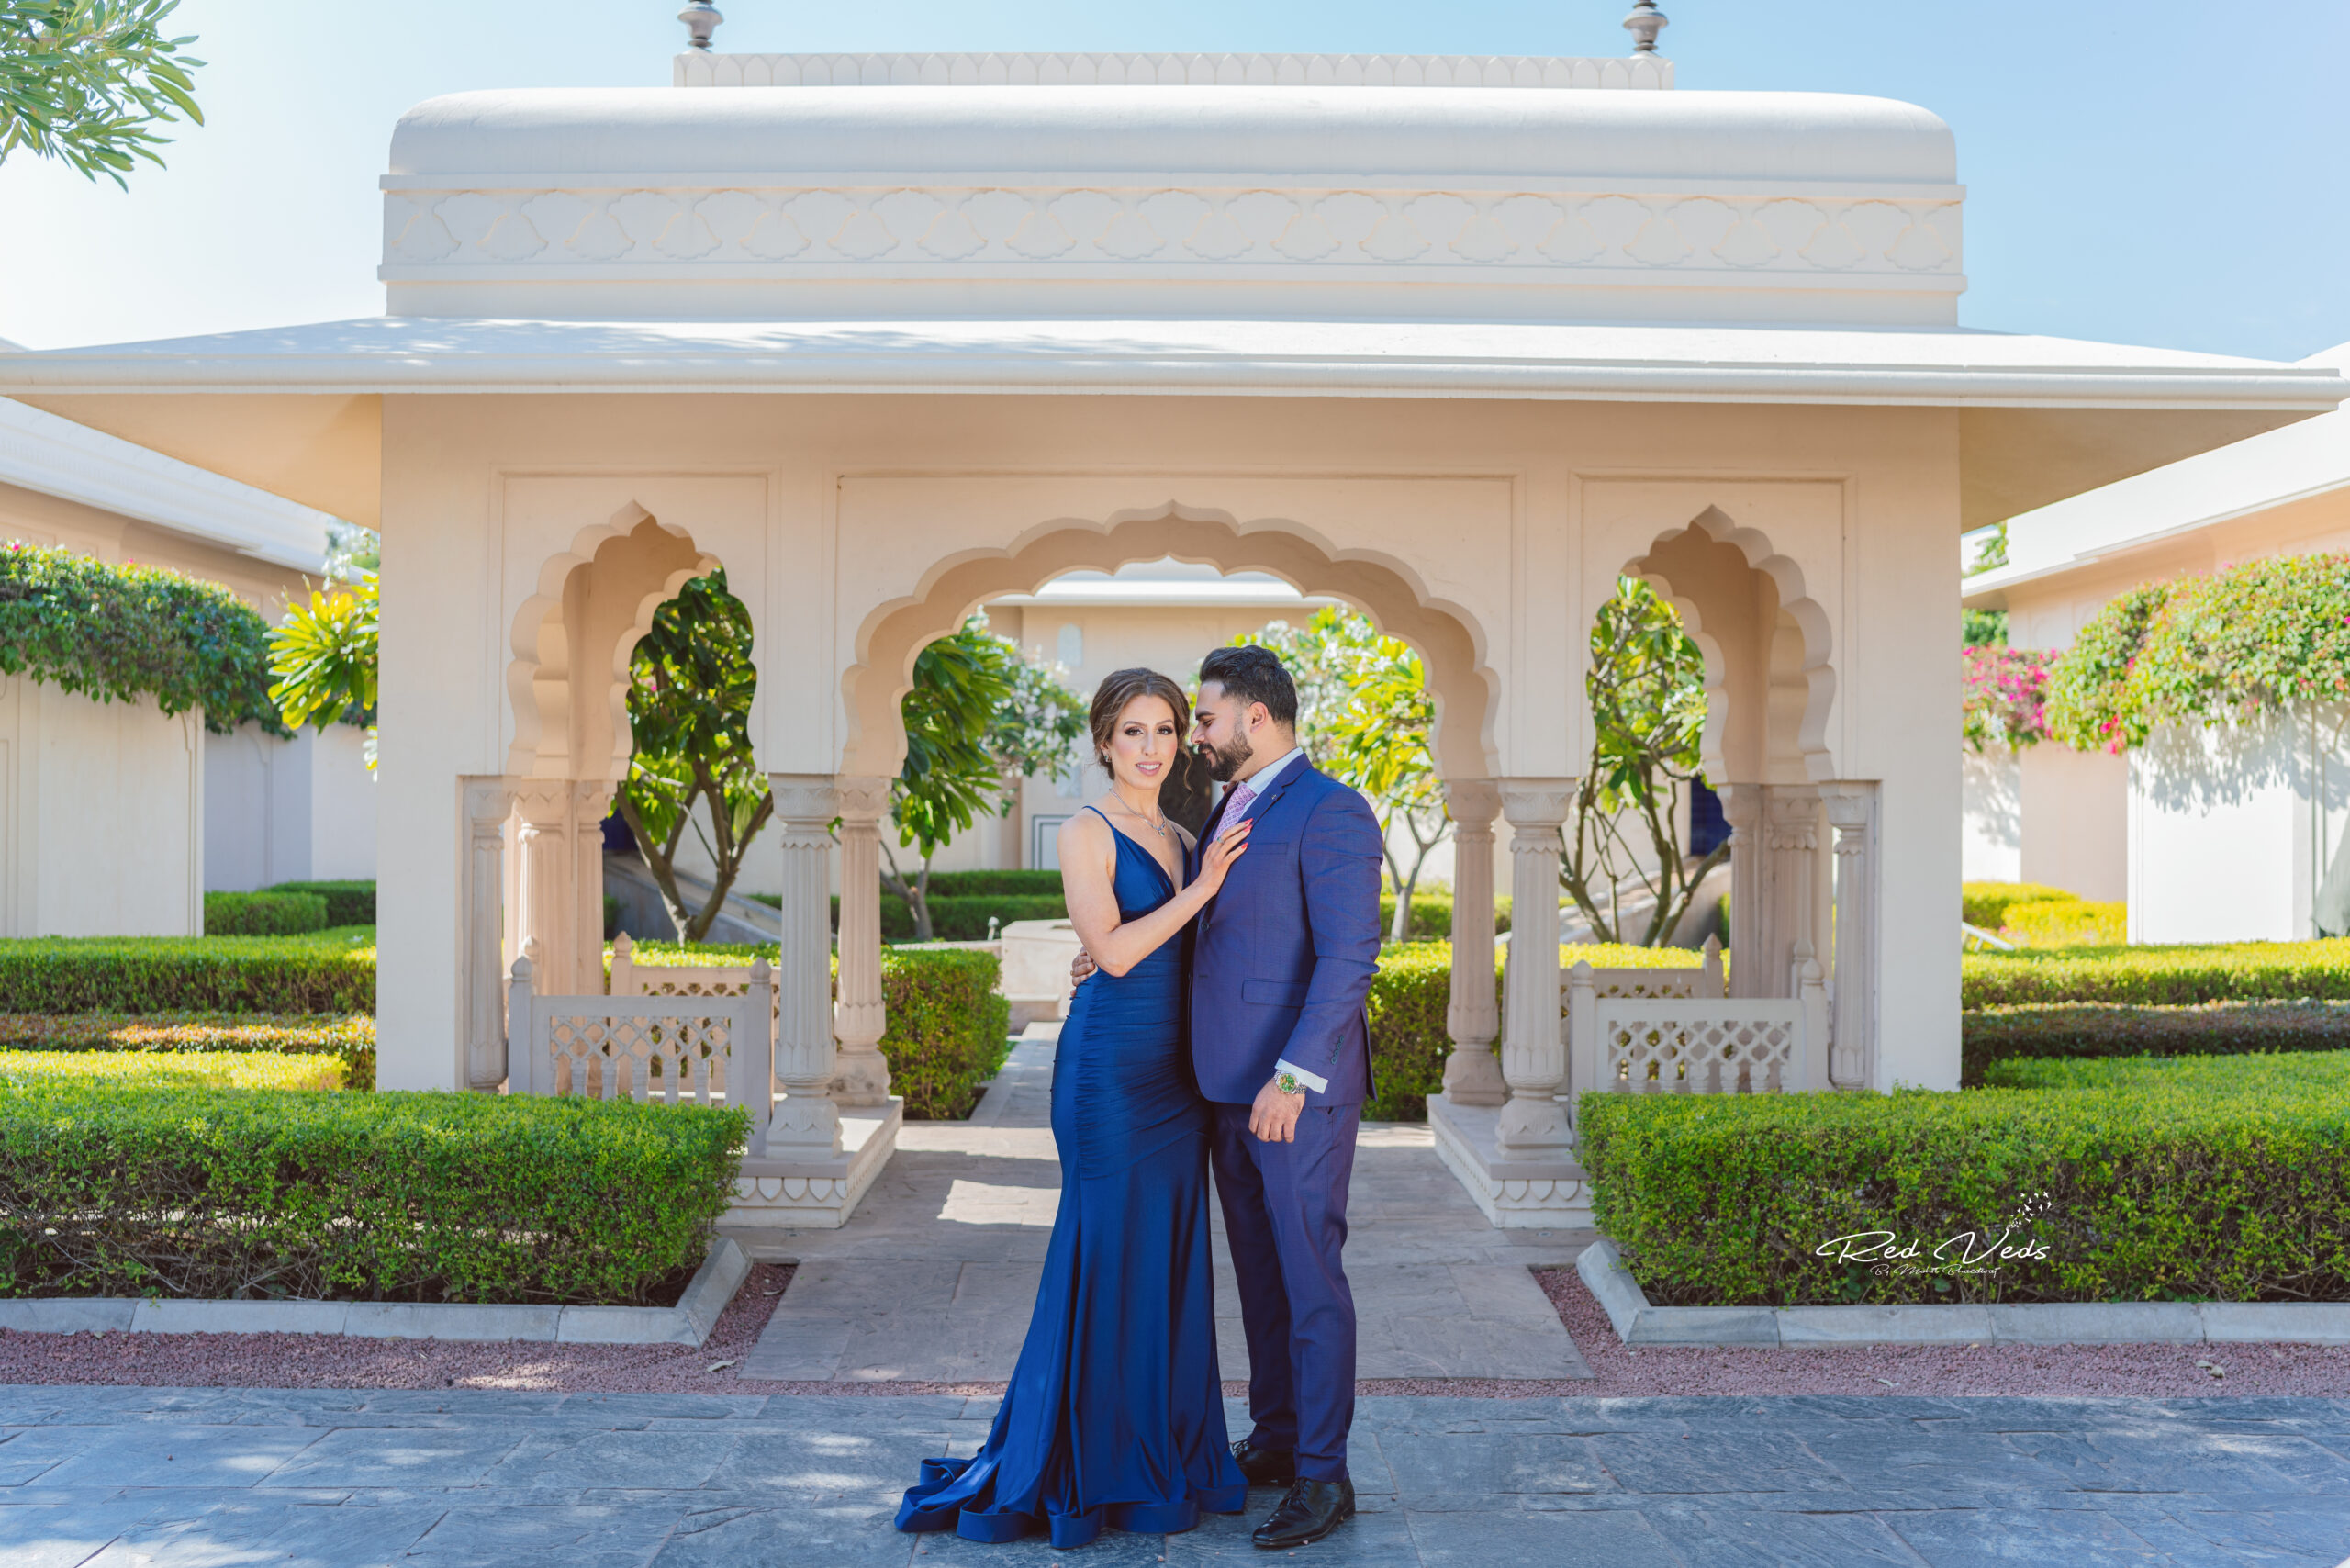 Best Pre-wedding photoshoot || Krupa ❤ Manjunath || Karnataka PRE-WEDDING  video || - YouTube